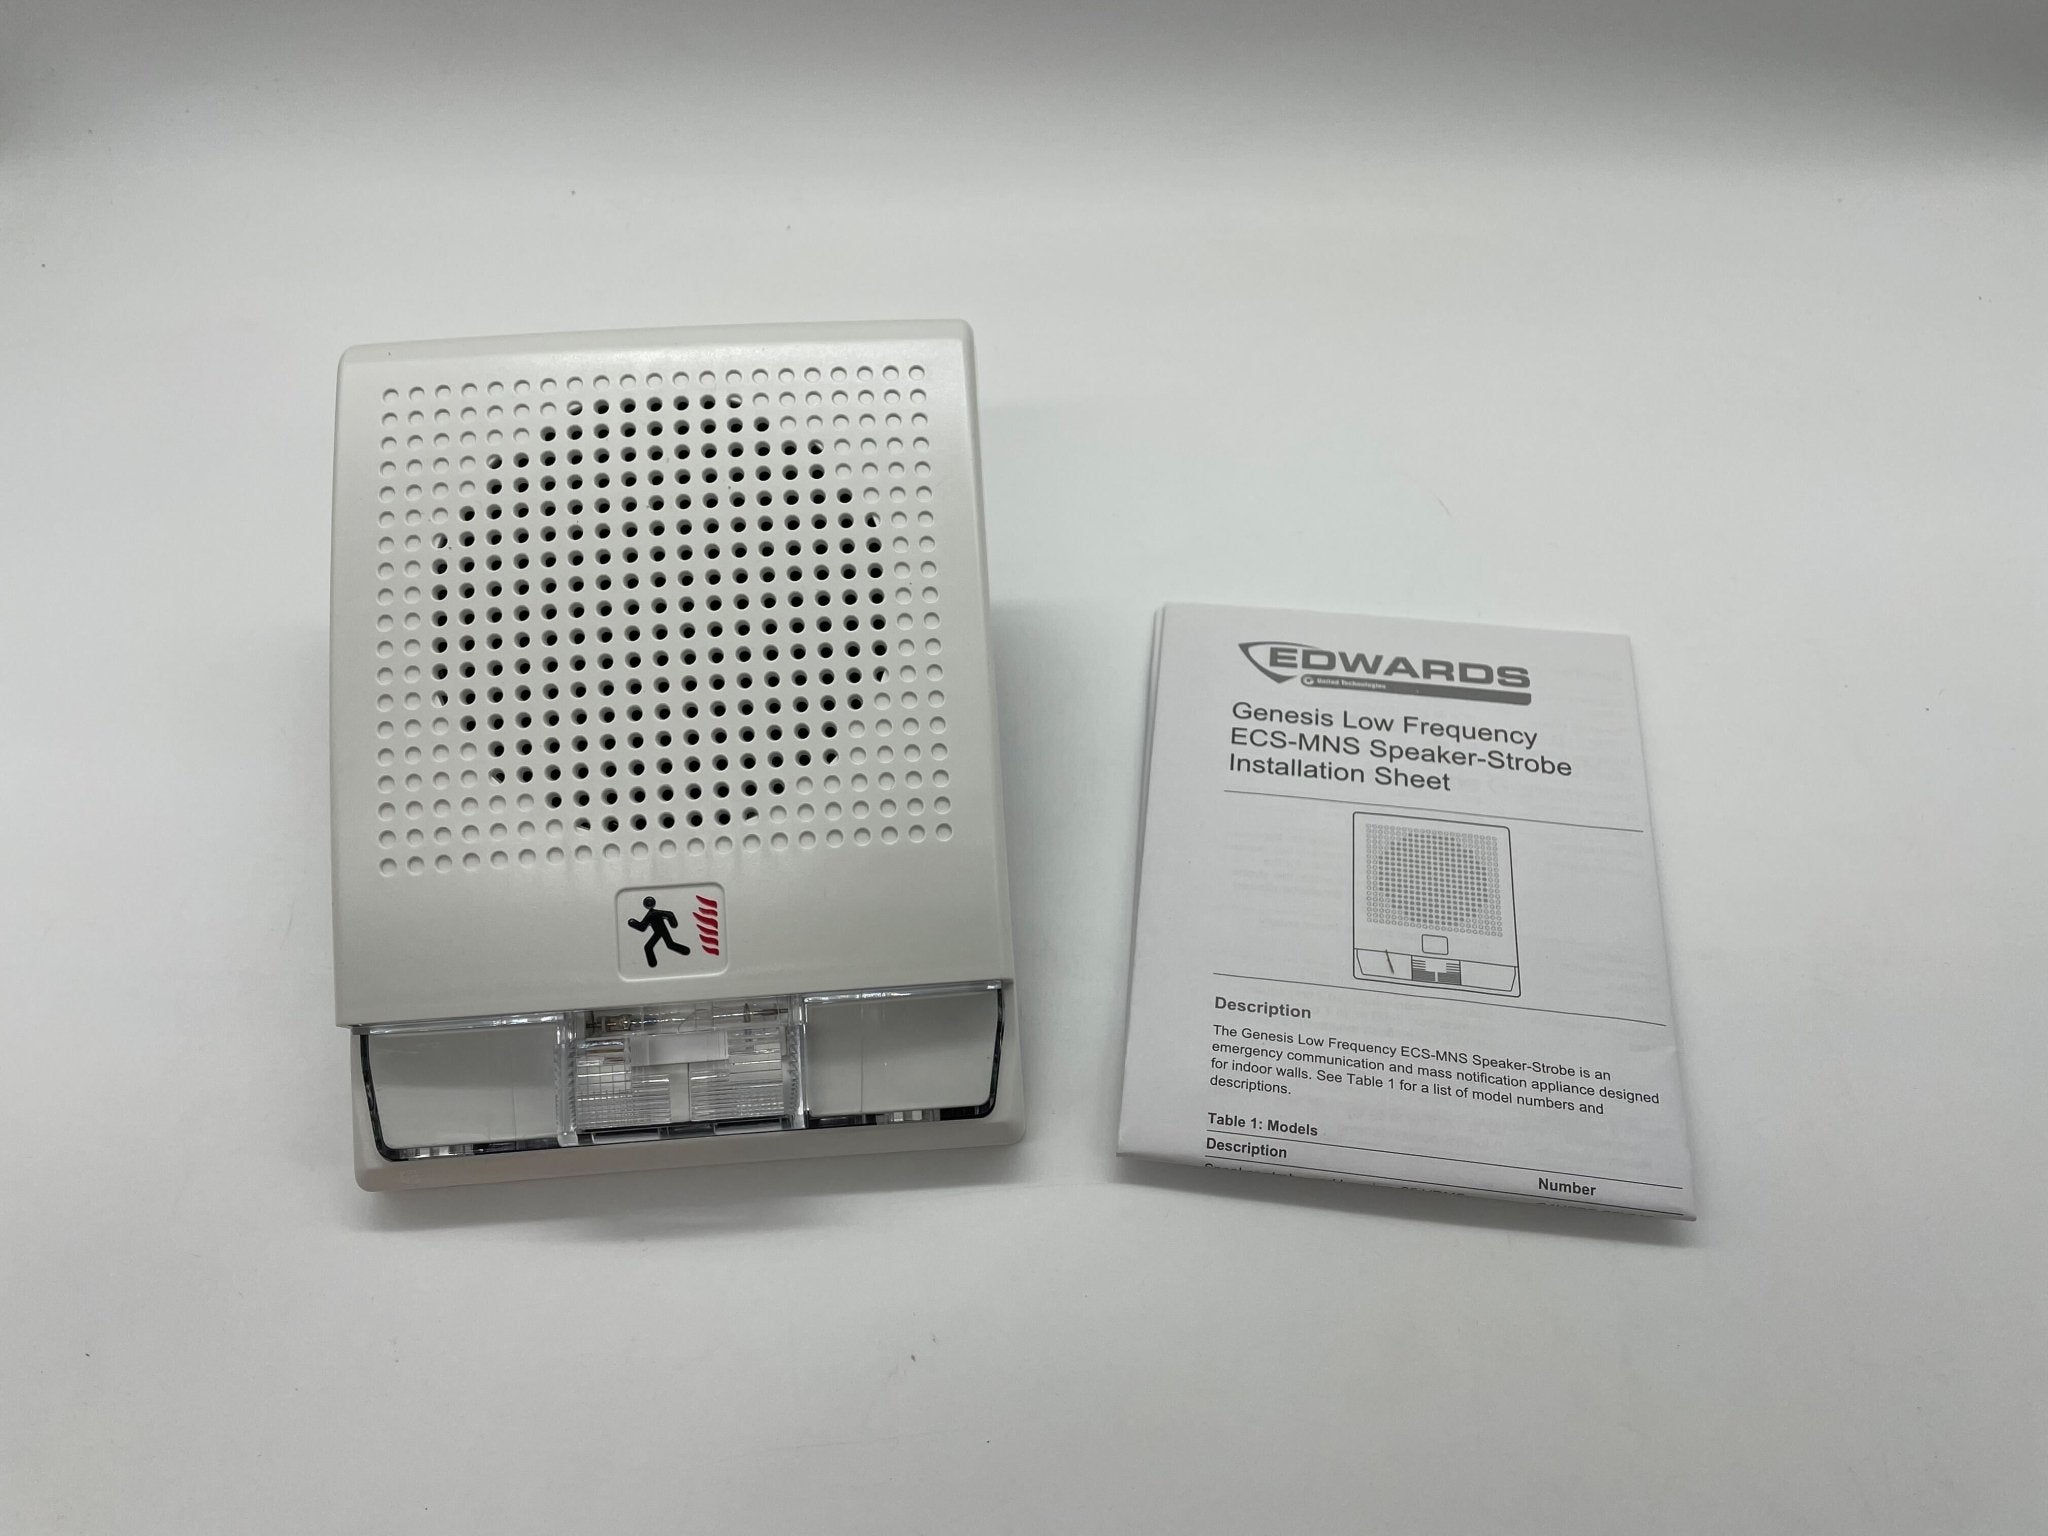 Edwards G4HFWN-S2VMC - The Fire Alarm Supplier